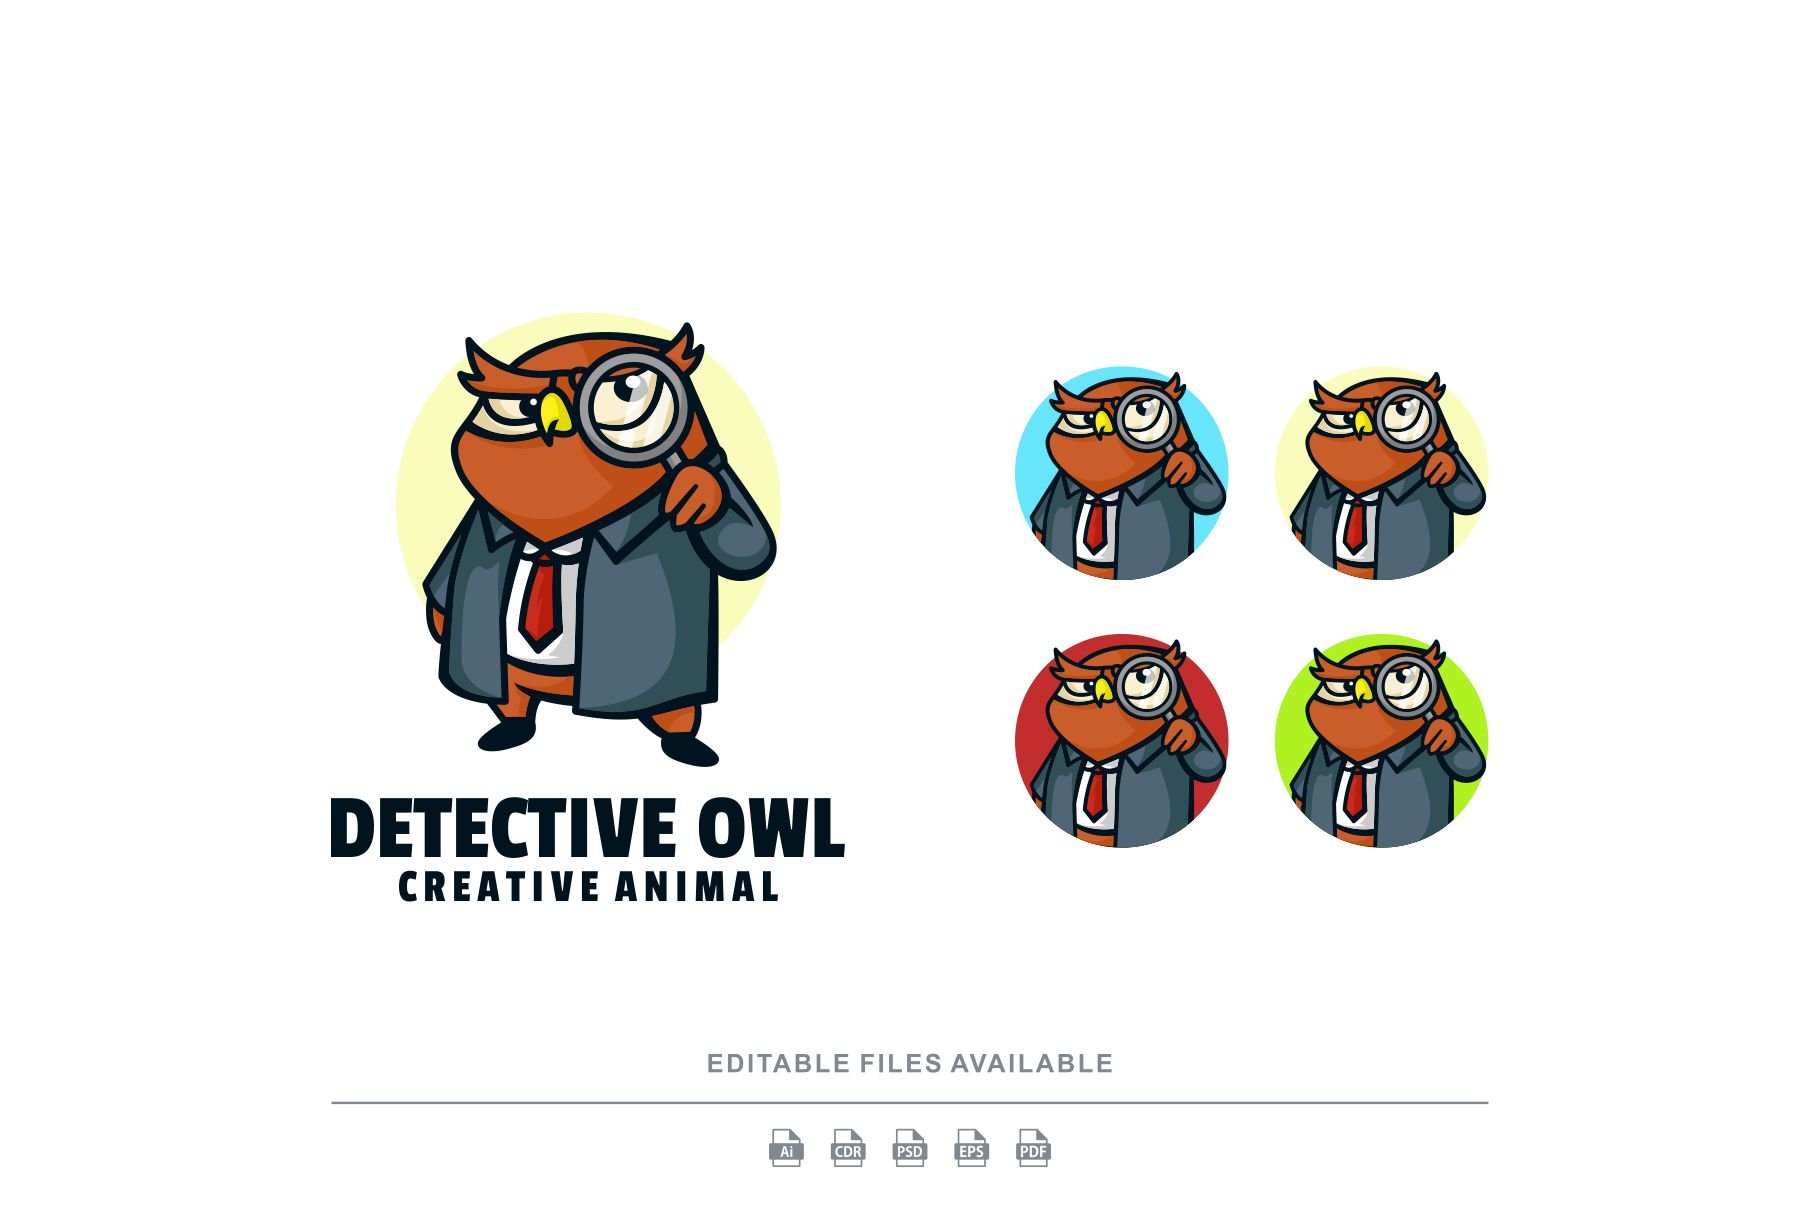 Detective Owl Cartoon Mascot Logo cover image.